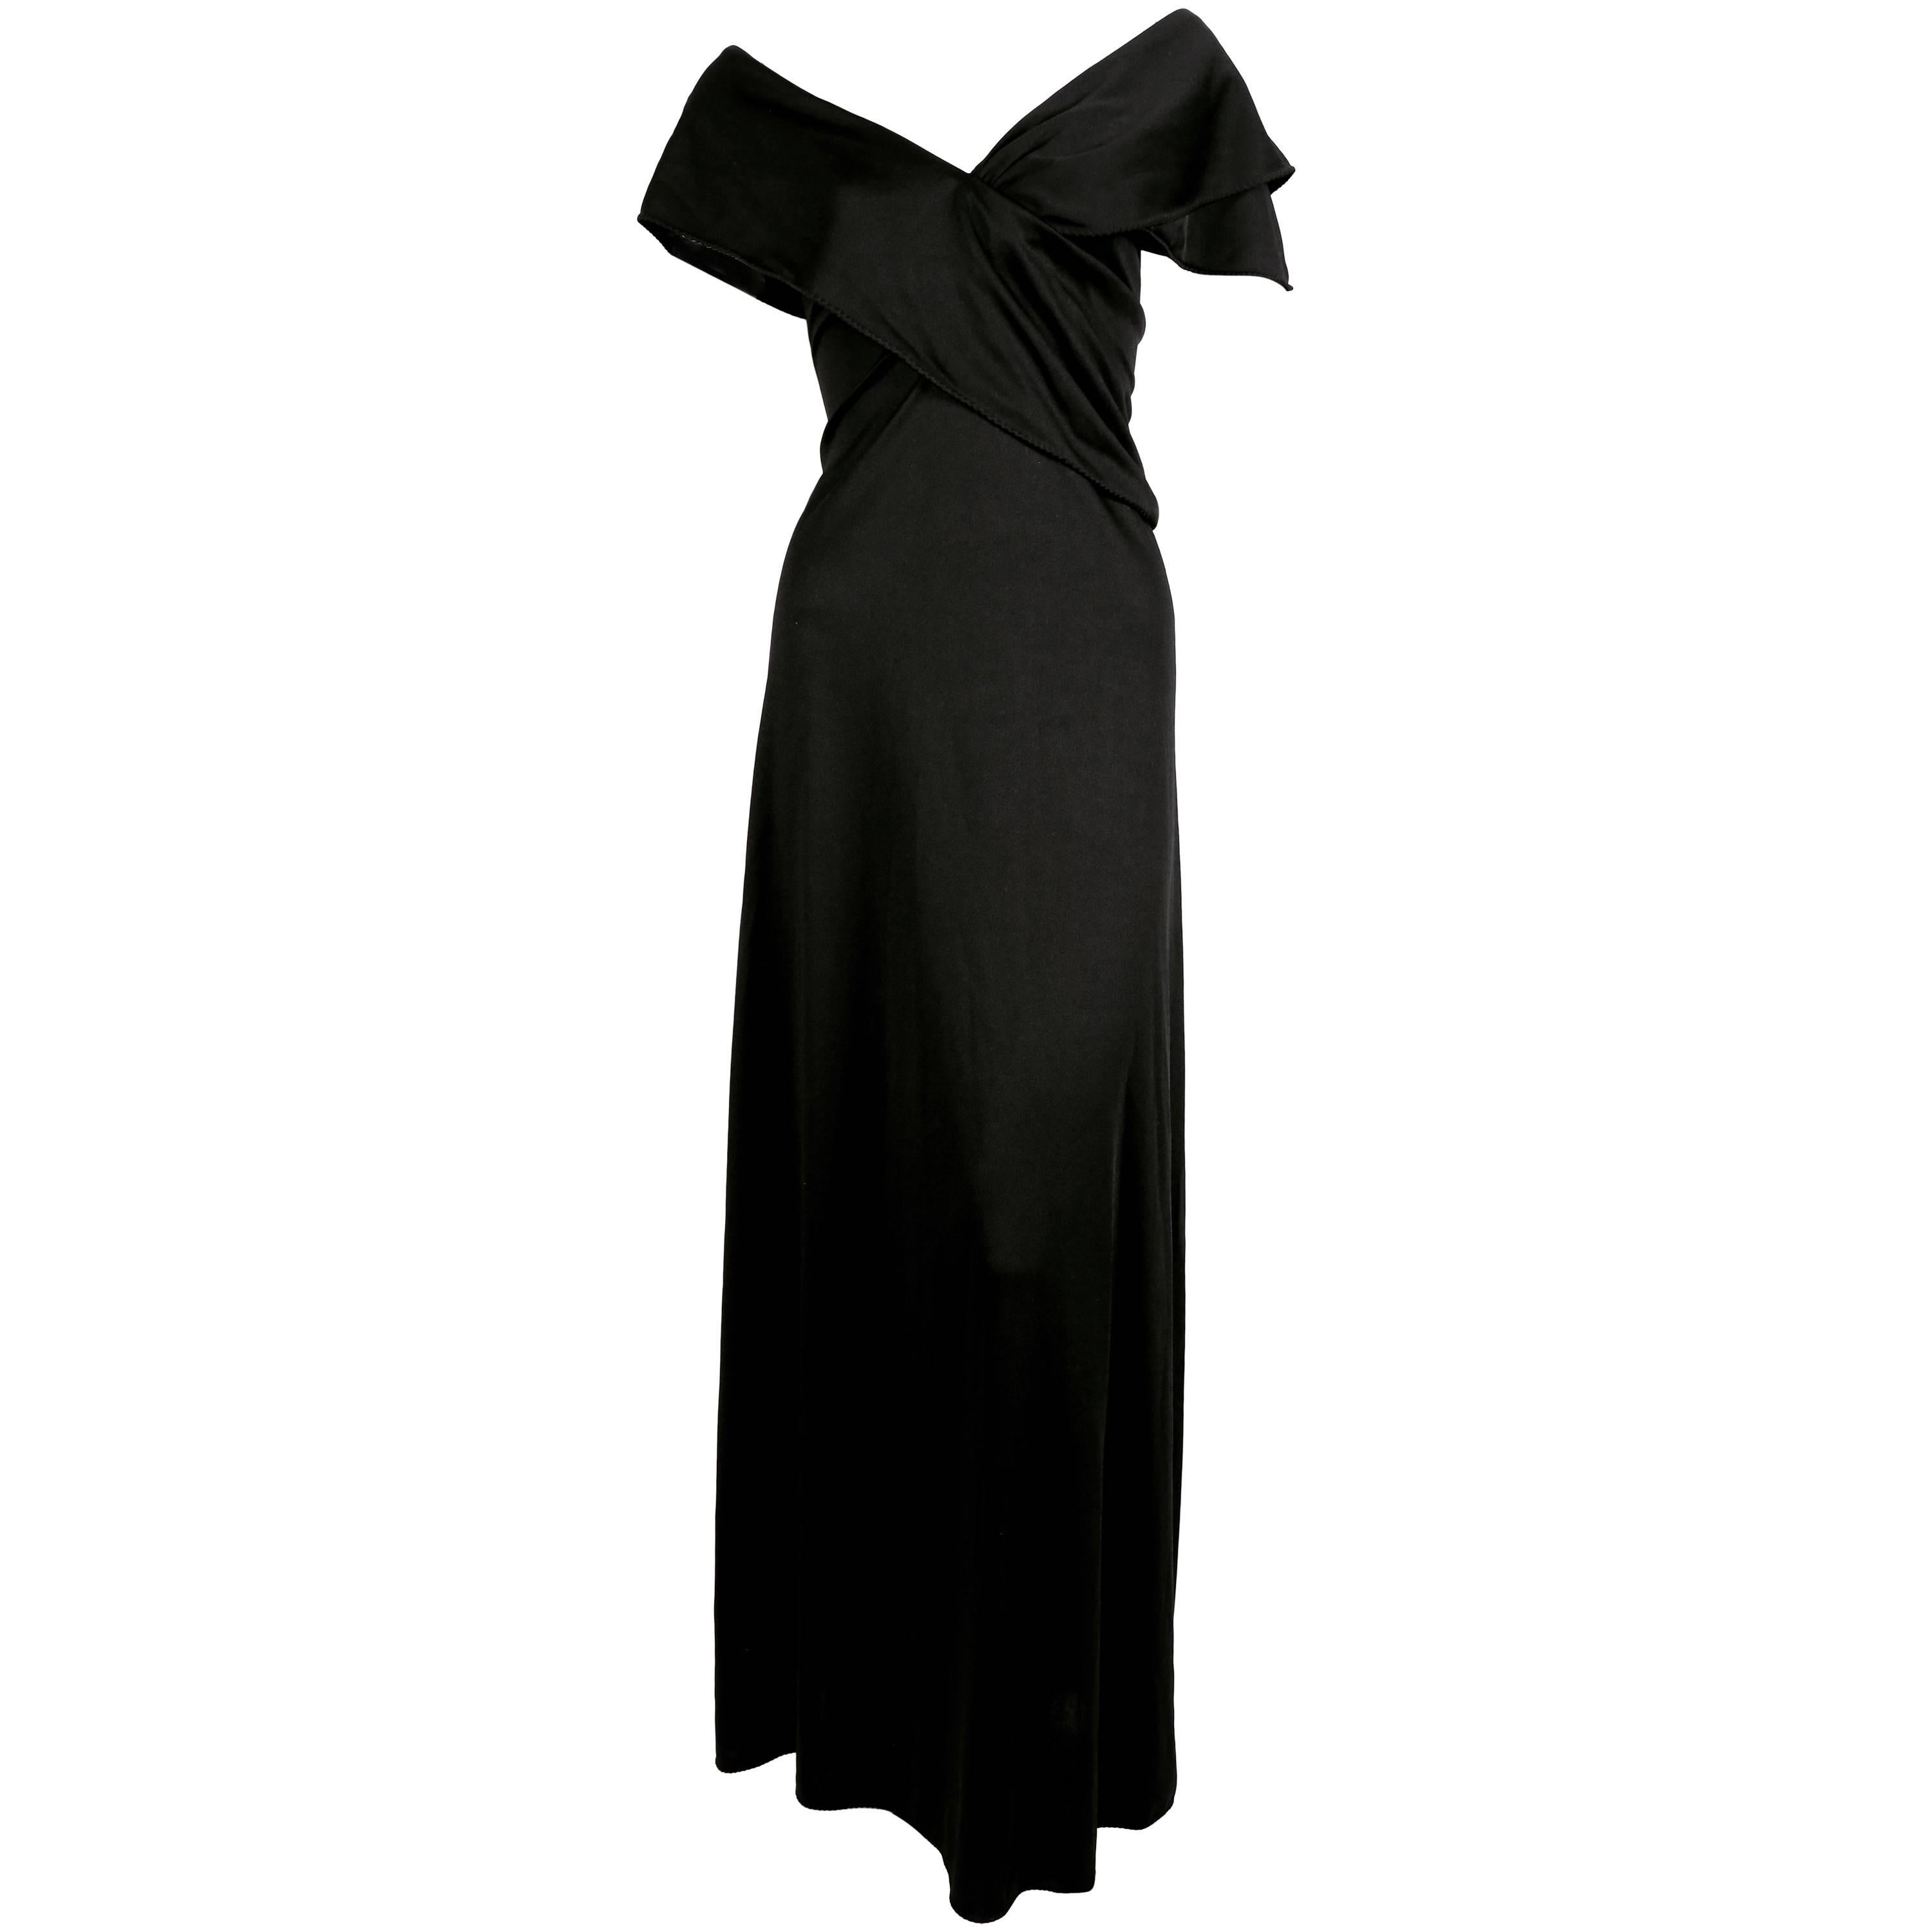 1970's STEPHEN BURROWS black jersey dress with draped neckline & 'lettuce' edges